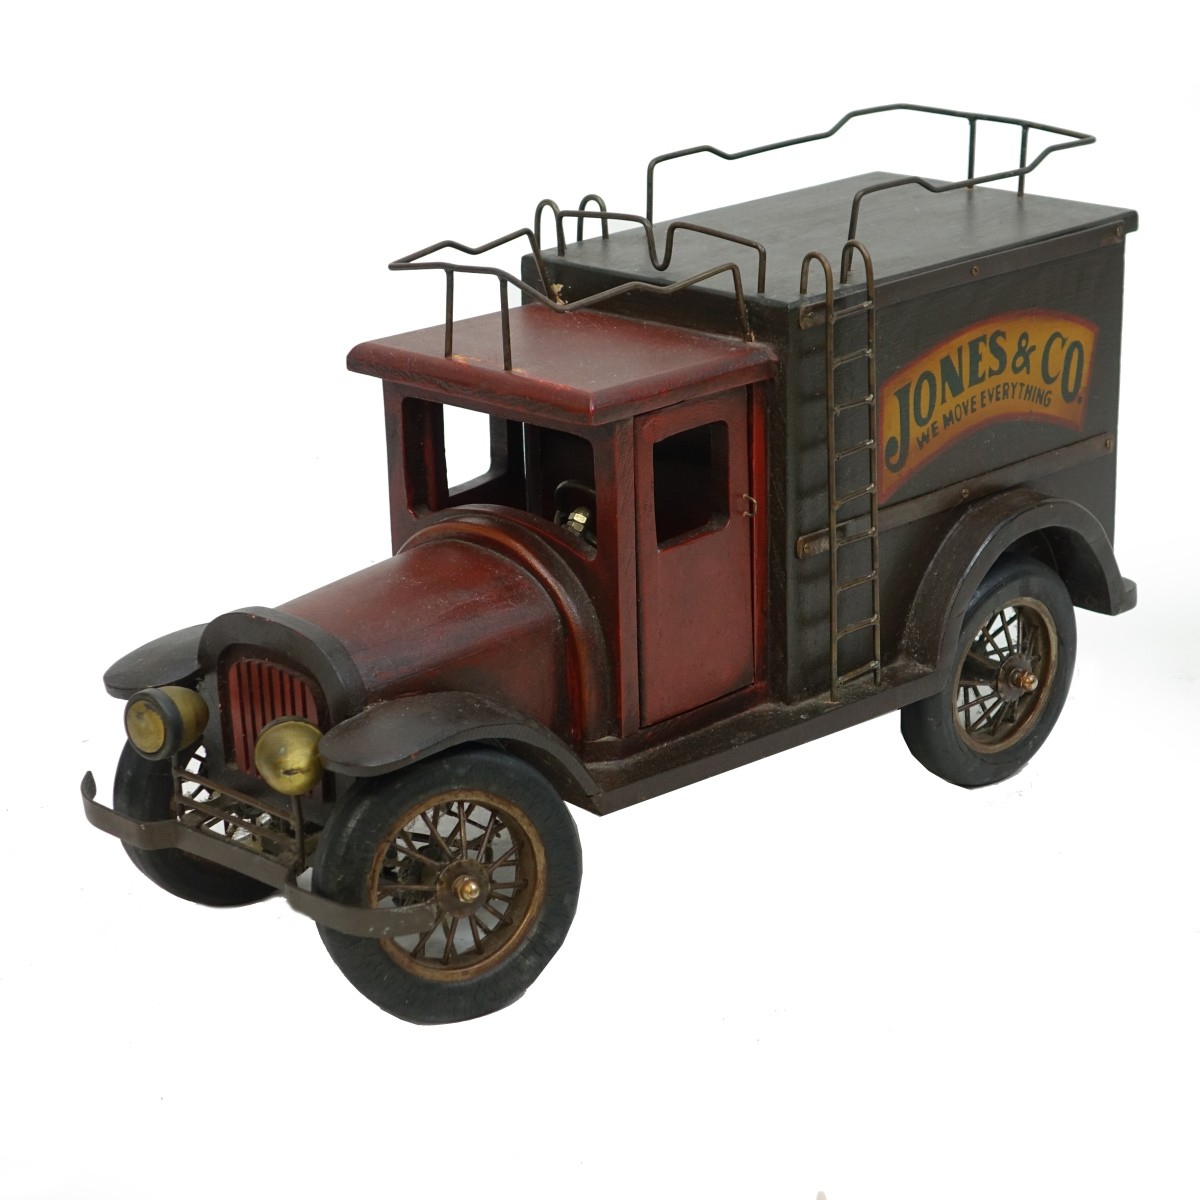 Vintage Lg. Wooden Truck marked Jones & Co.